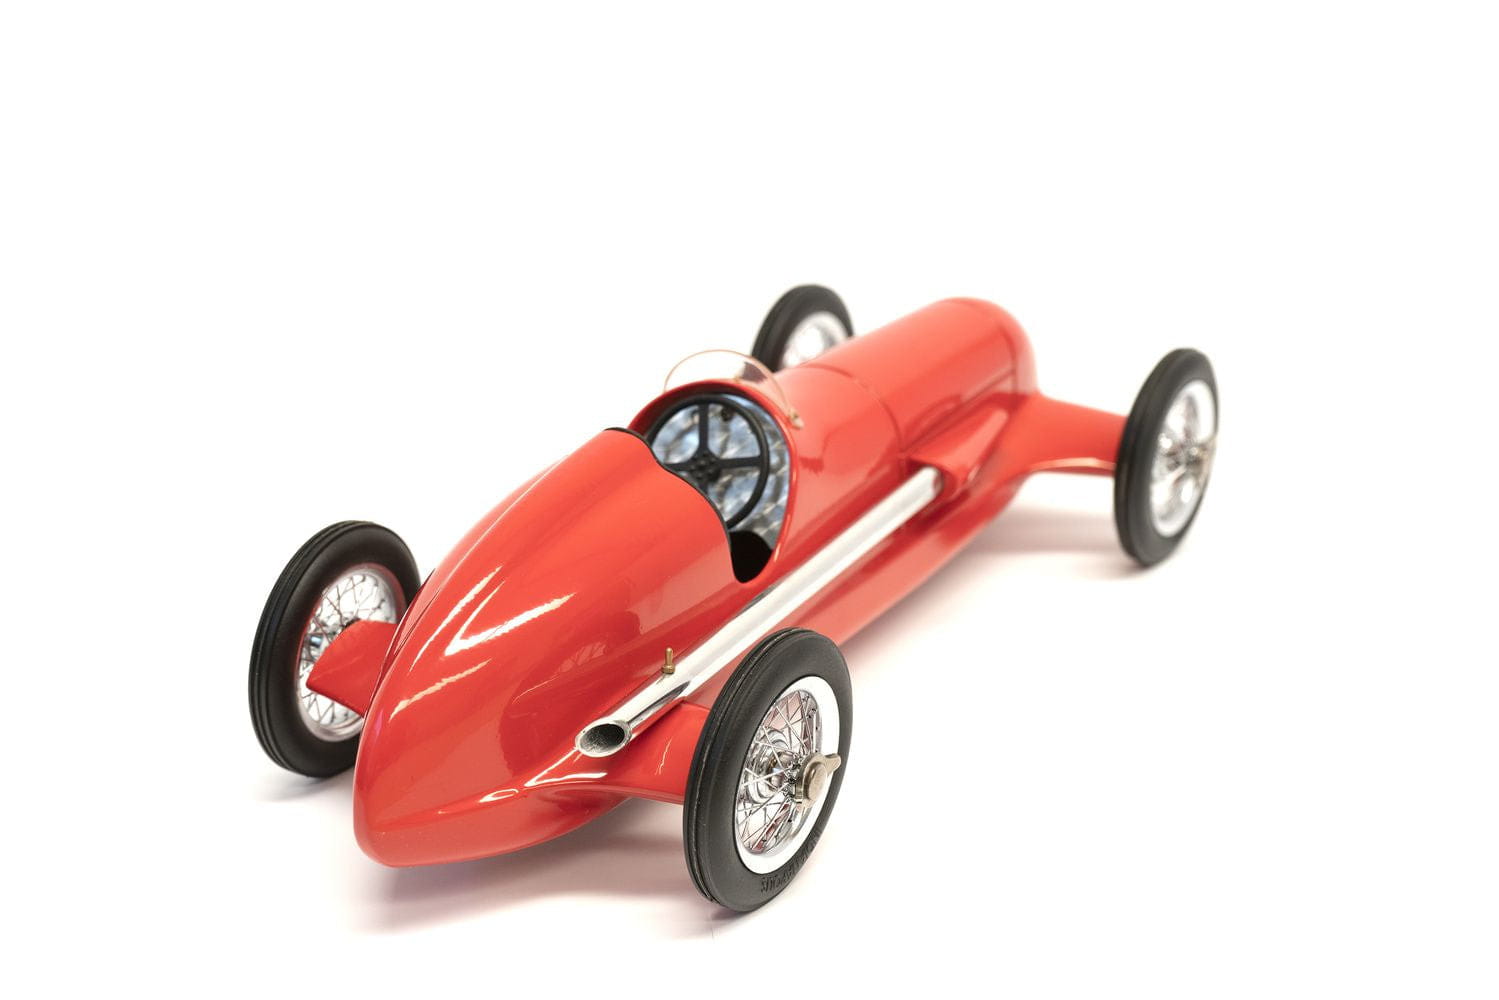 Authentic Models Racer Modelauto, Red